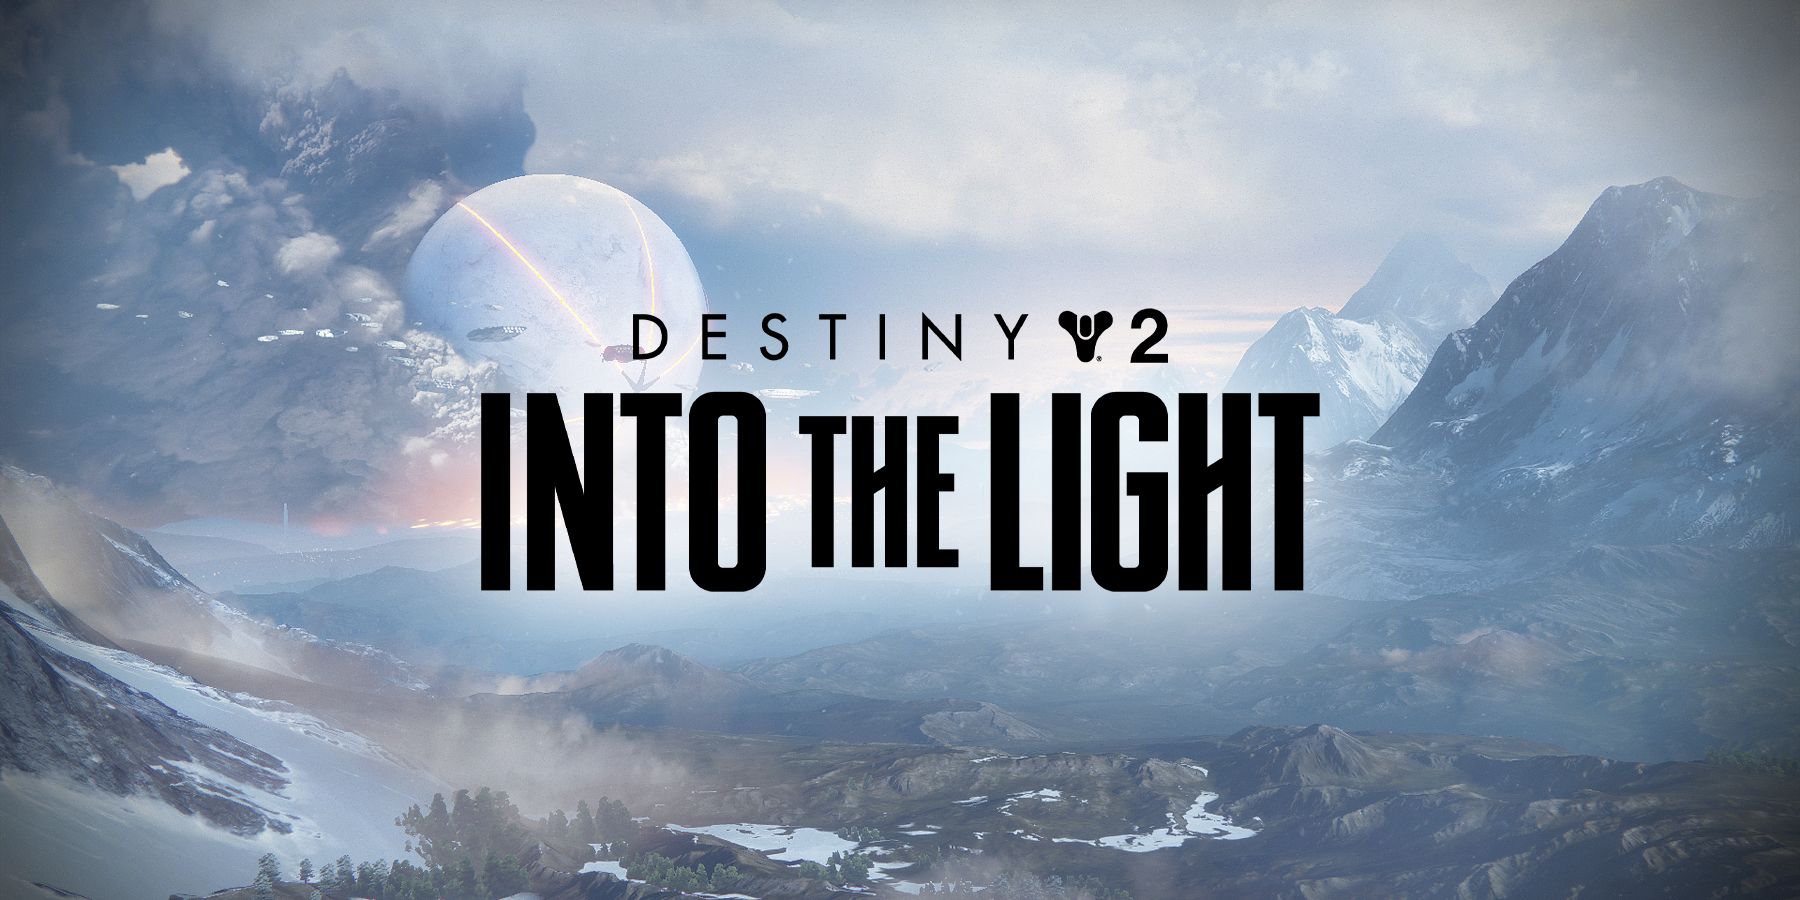 Destiny 2 Into the Light logo over Red War background